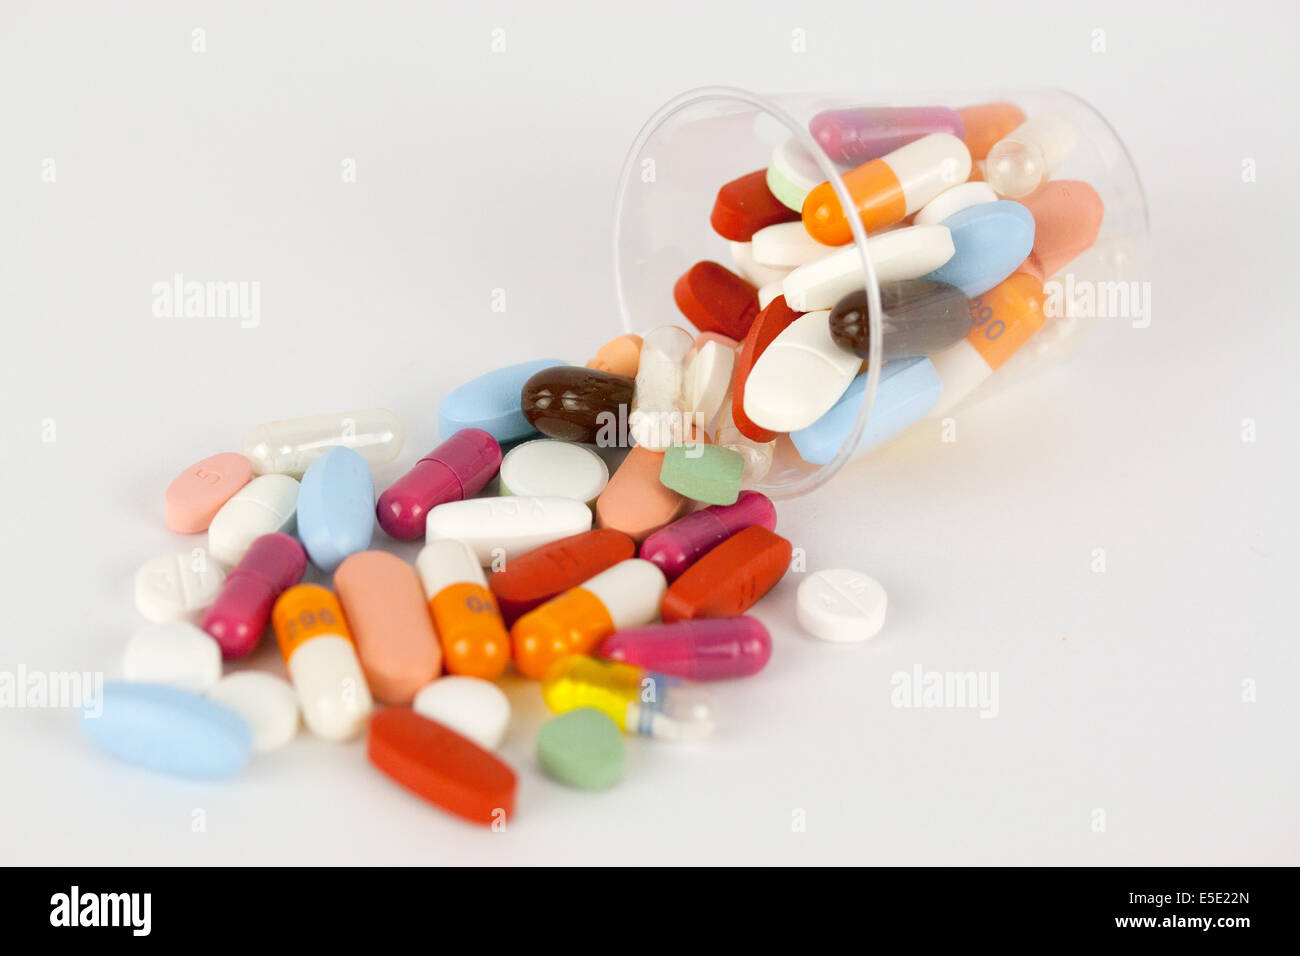 Tabletten medikamente pillen medikament pille tablette apotheke gesundheit medizin medizinisch pharma pharmazie pharmazeutisch b Foto de stock